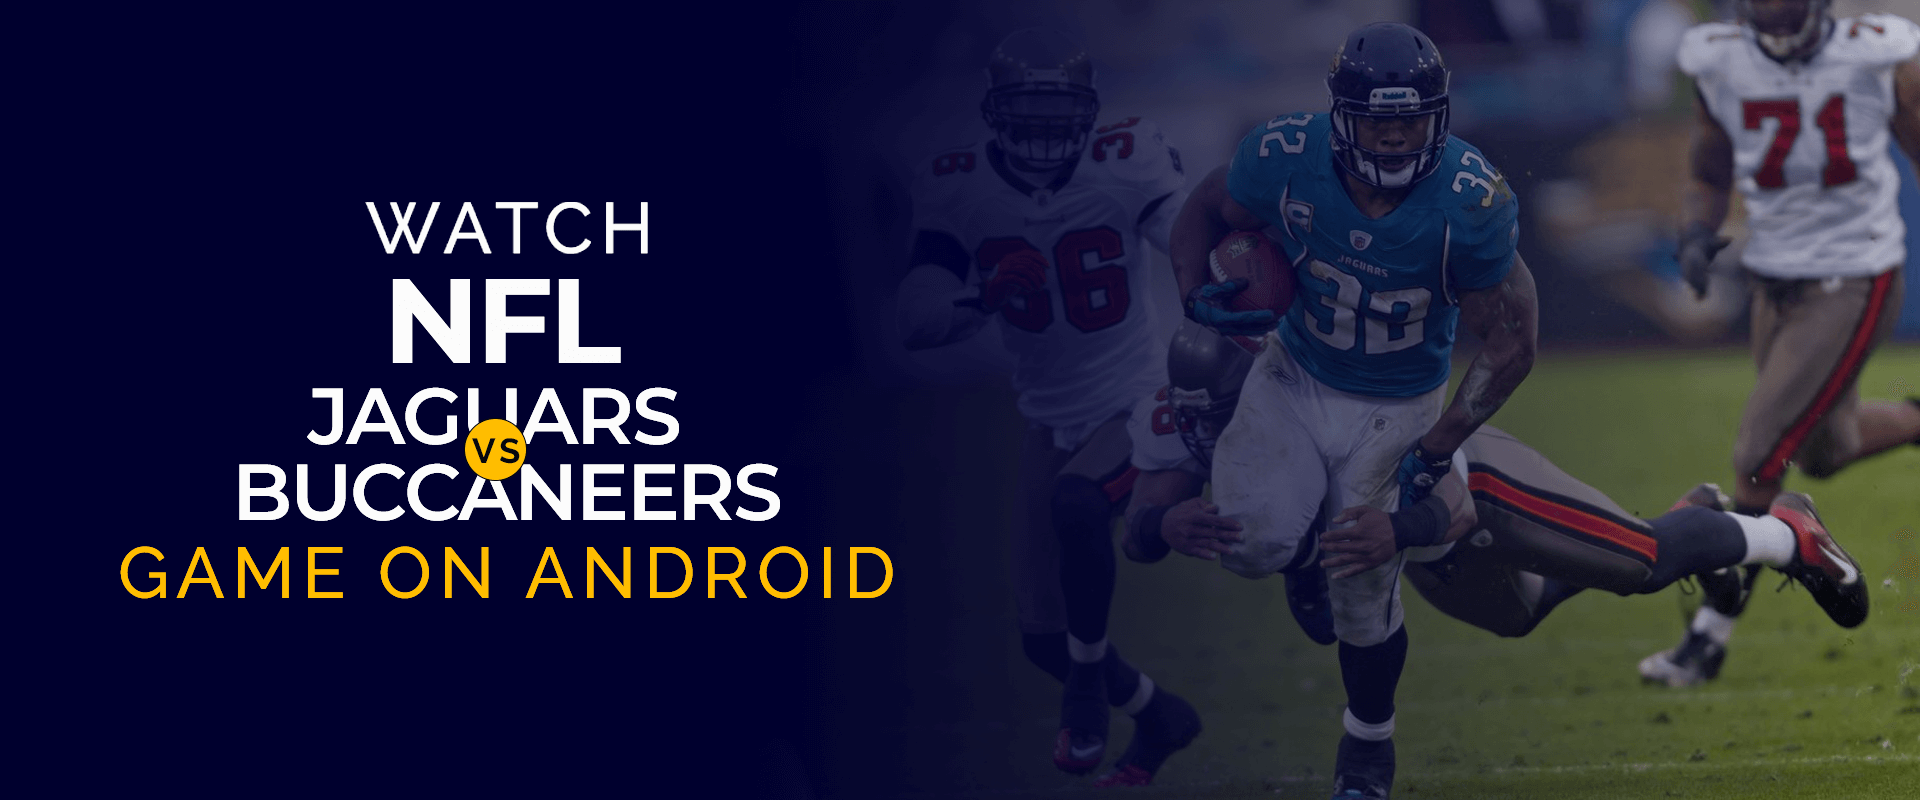 Guarda la partita NFL Jaguars Vs Buccaneers su Android